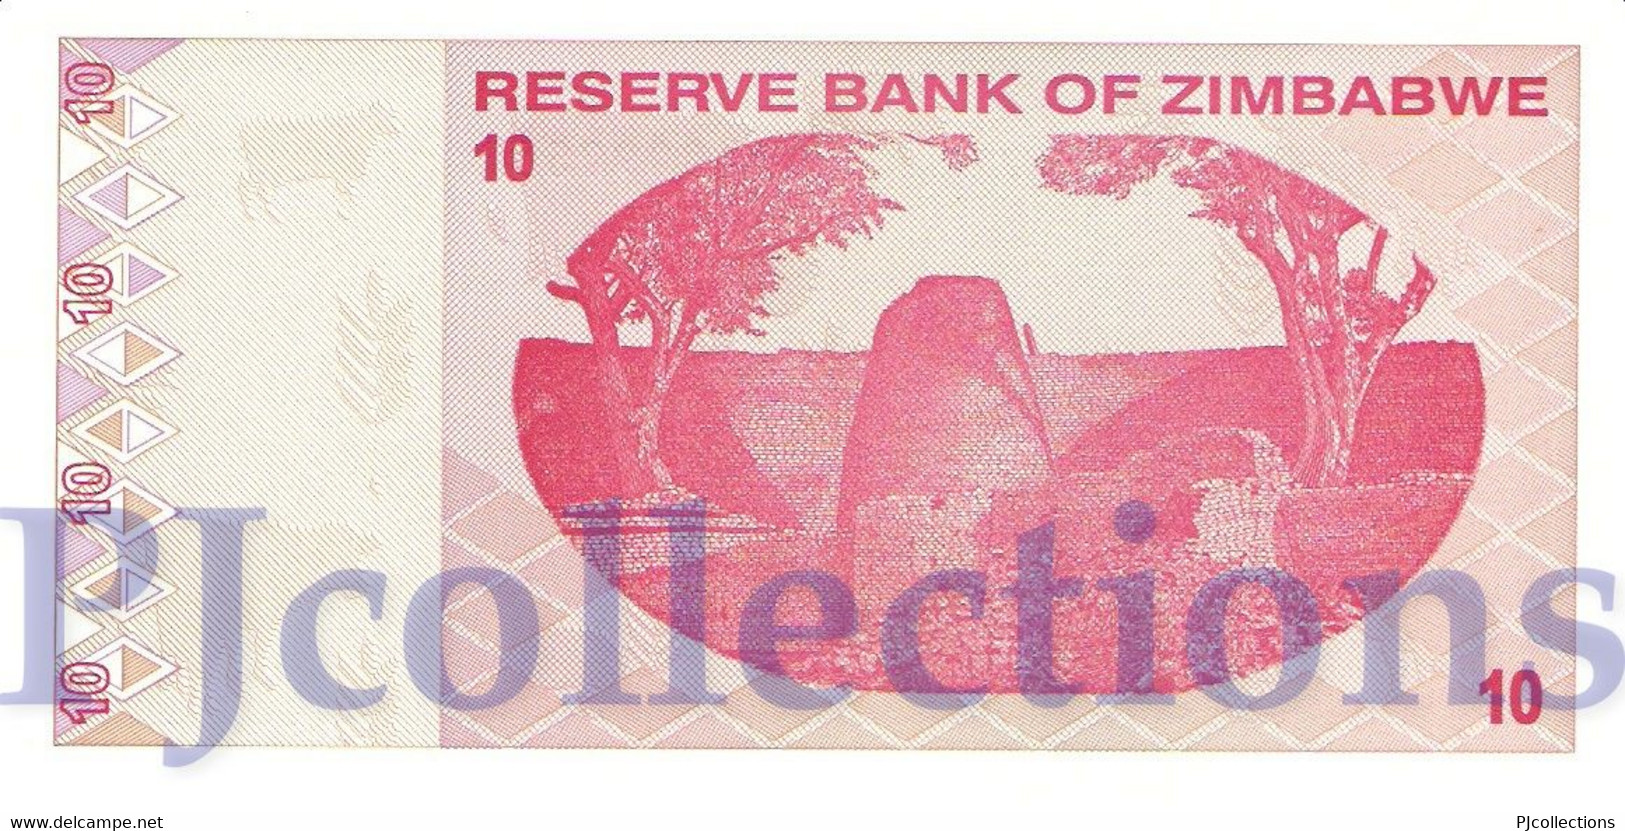 ZIMBABWE 10 DOLLAR 2009 PICK 94 UNC PREFIX "AA" - Zimbabwe